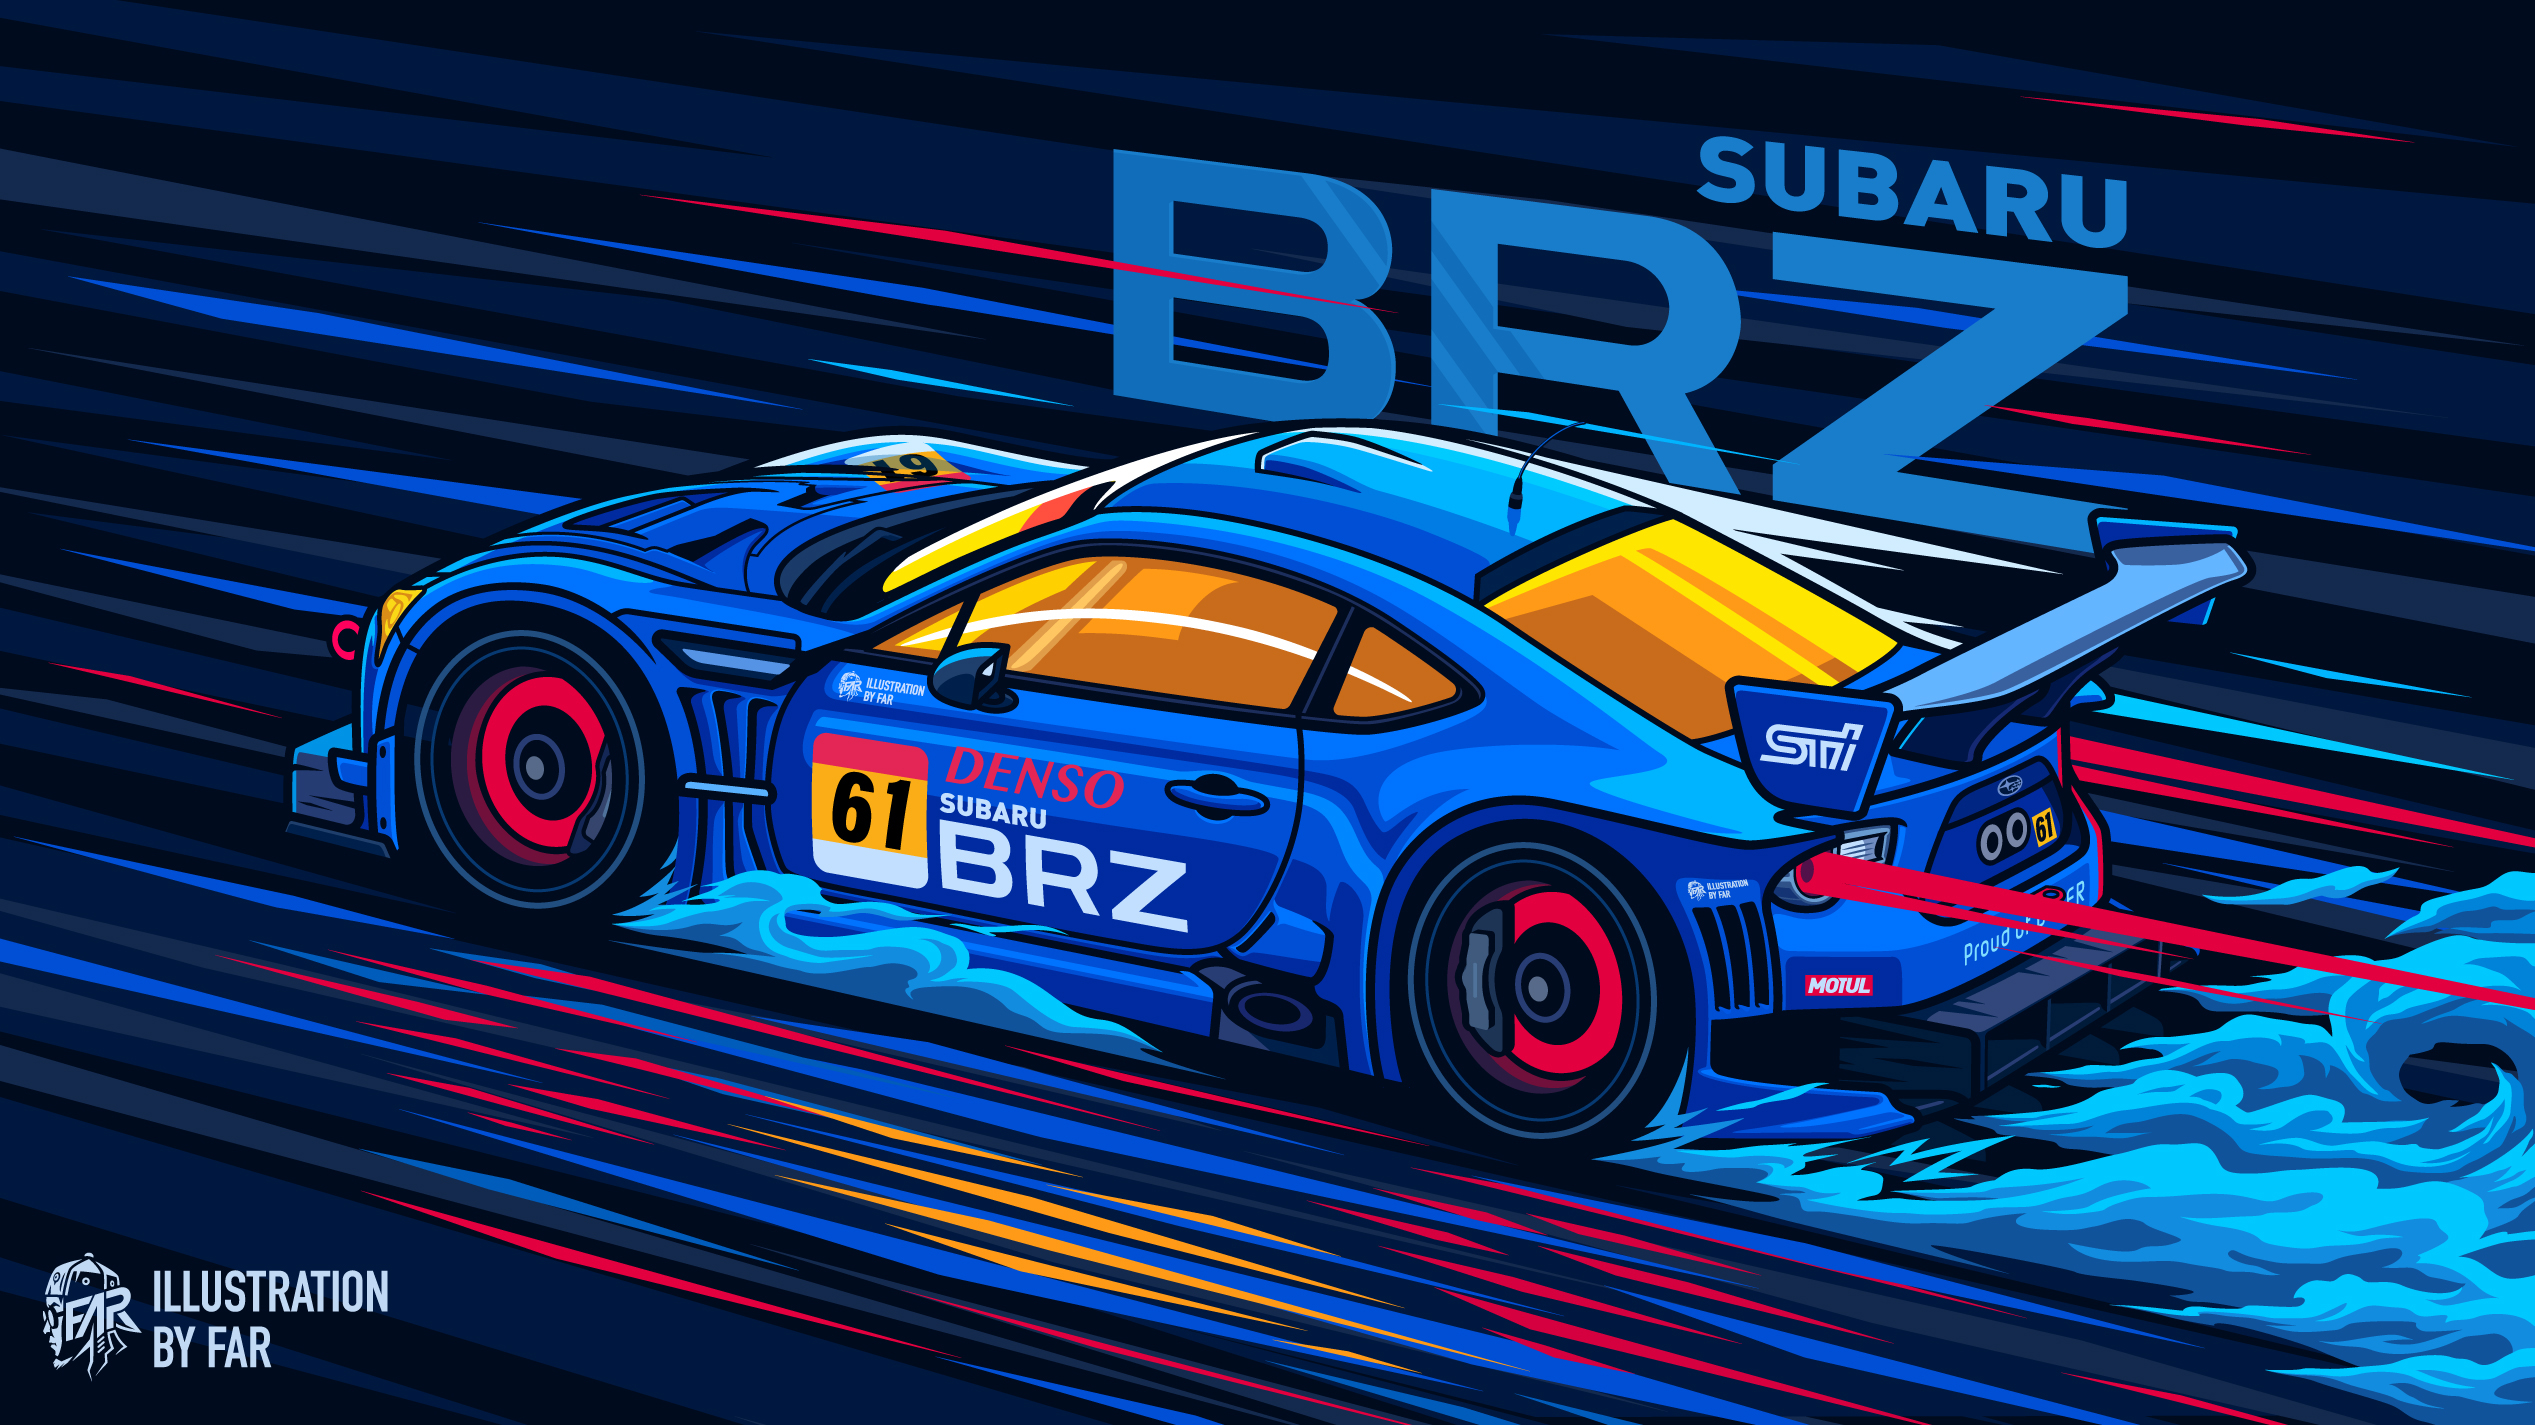 Digital Art Artwork Illustration Car Vehicle Subaru Subaru BRZ Japanese Cars Spoilers Race Cars Smok 2535x1425